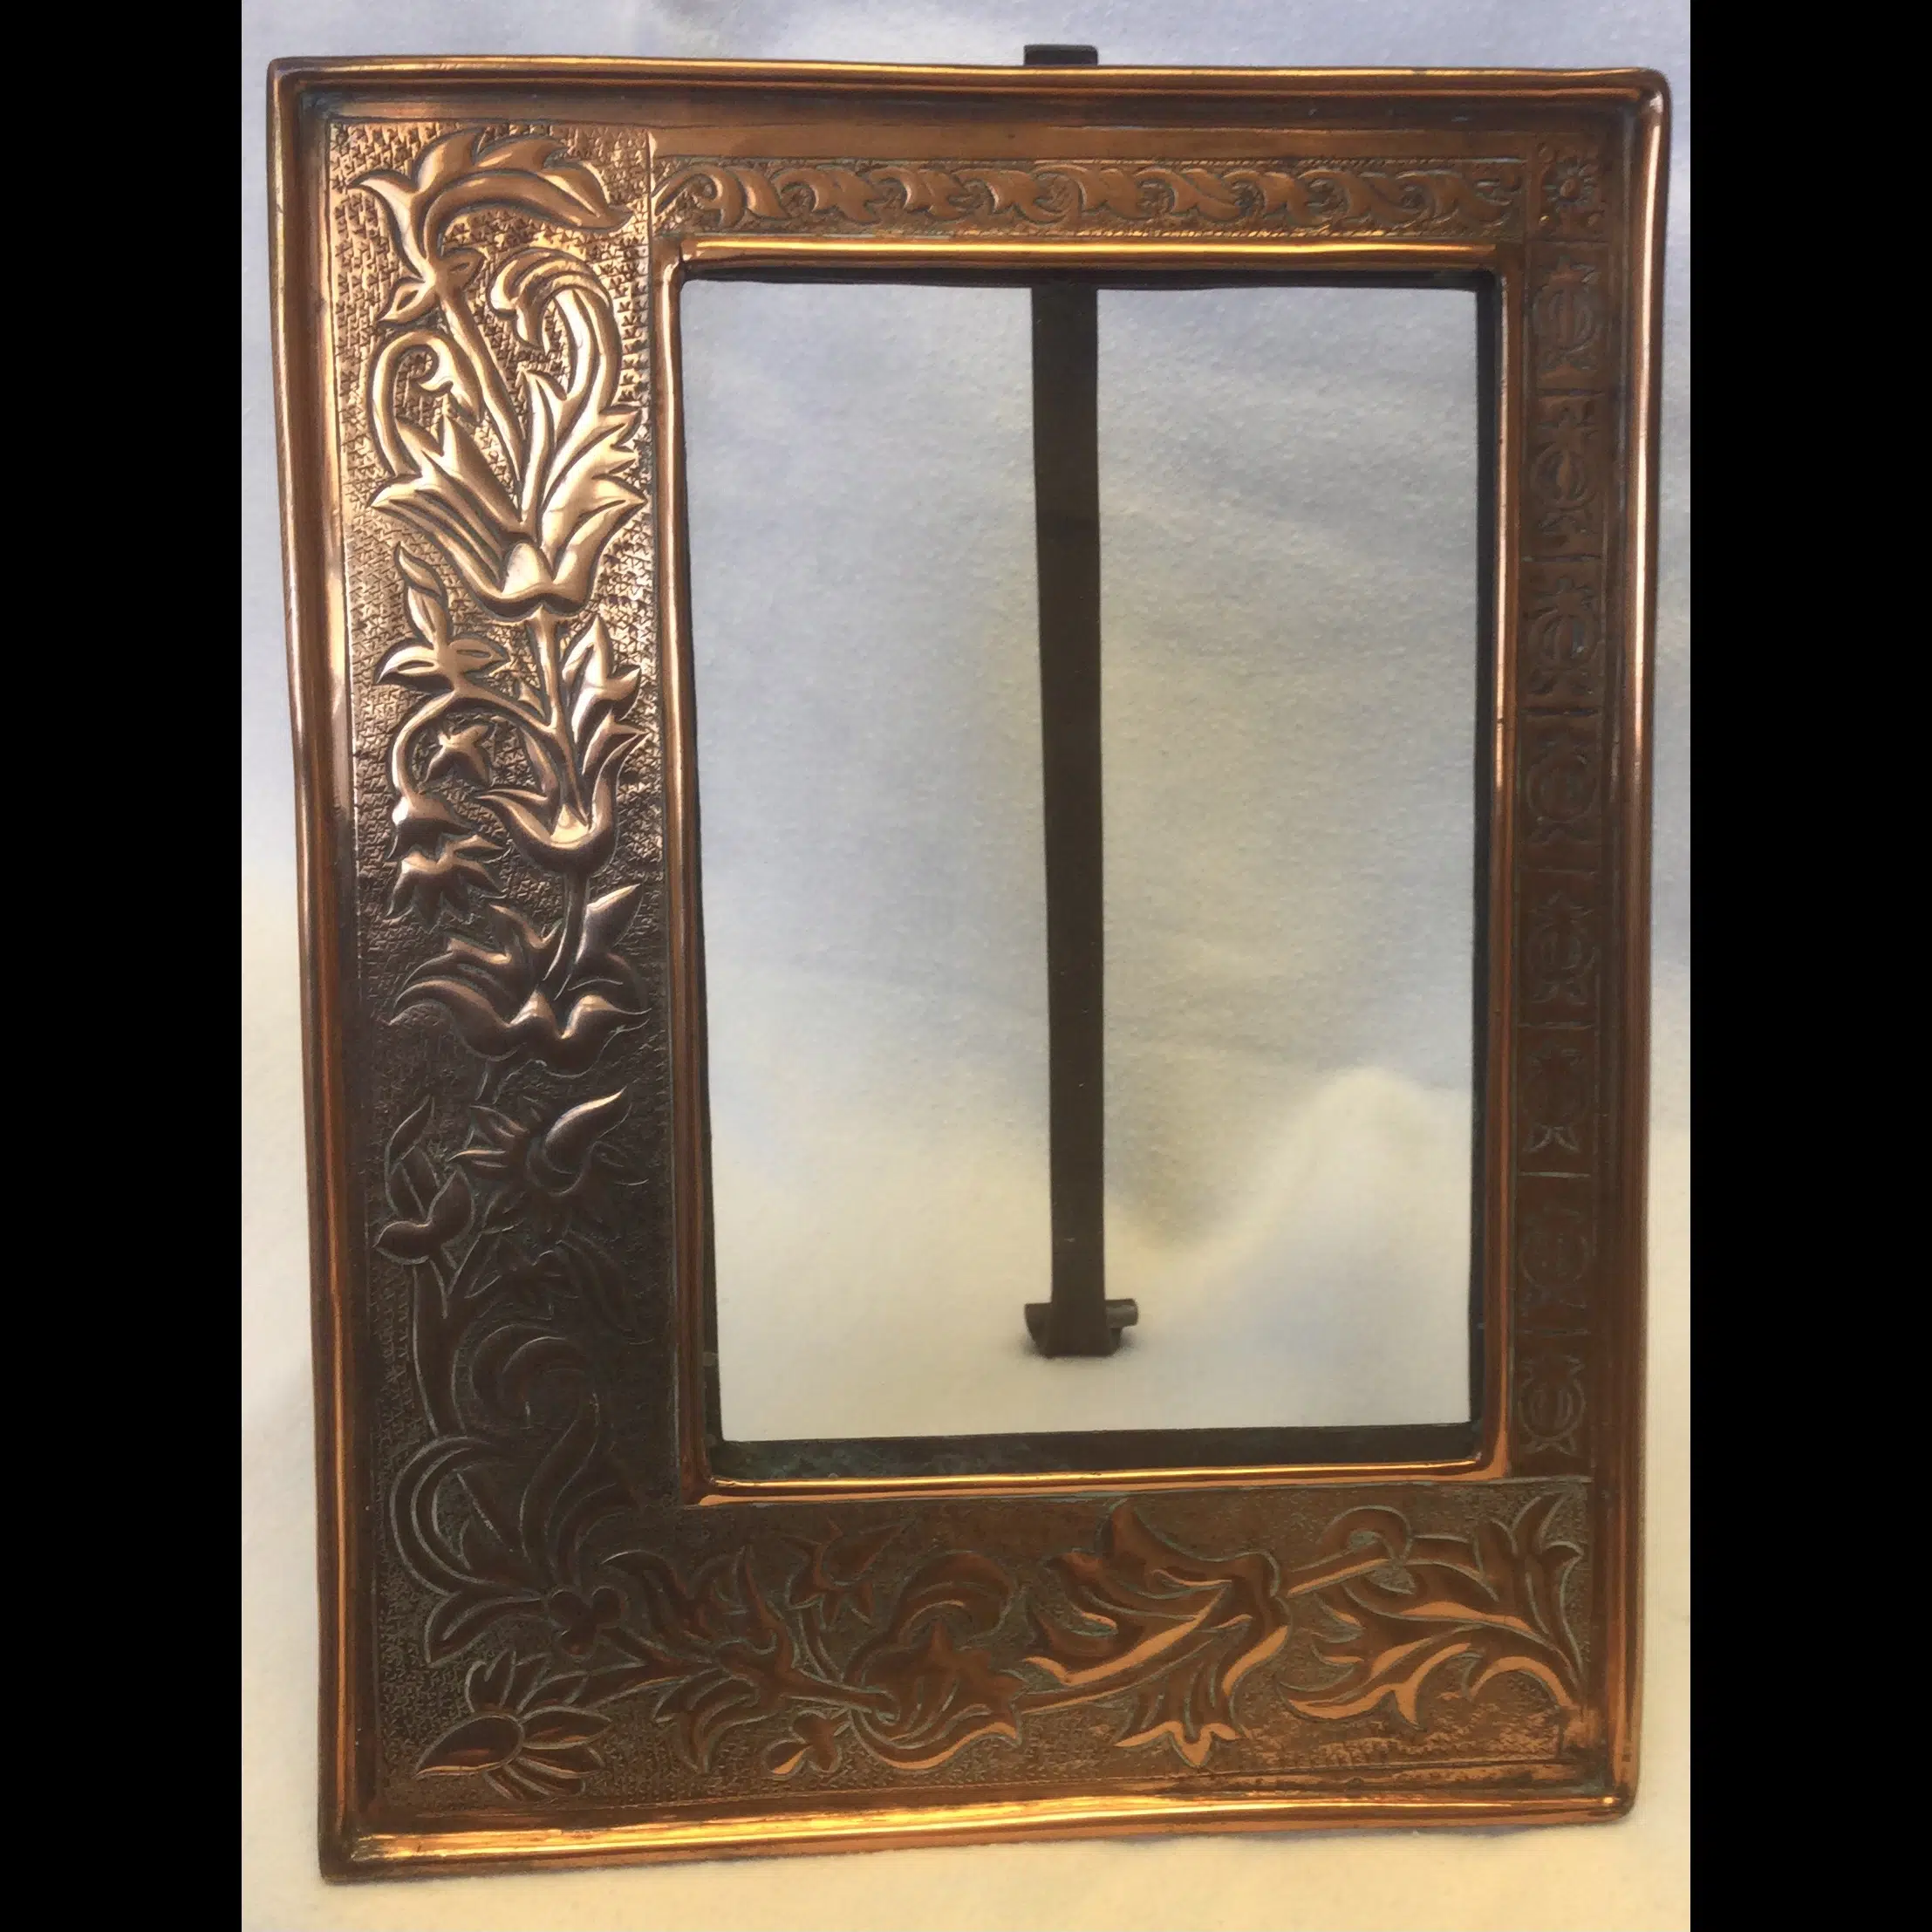 keswick school of industrial art ksia copper photo frame